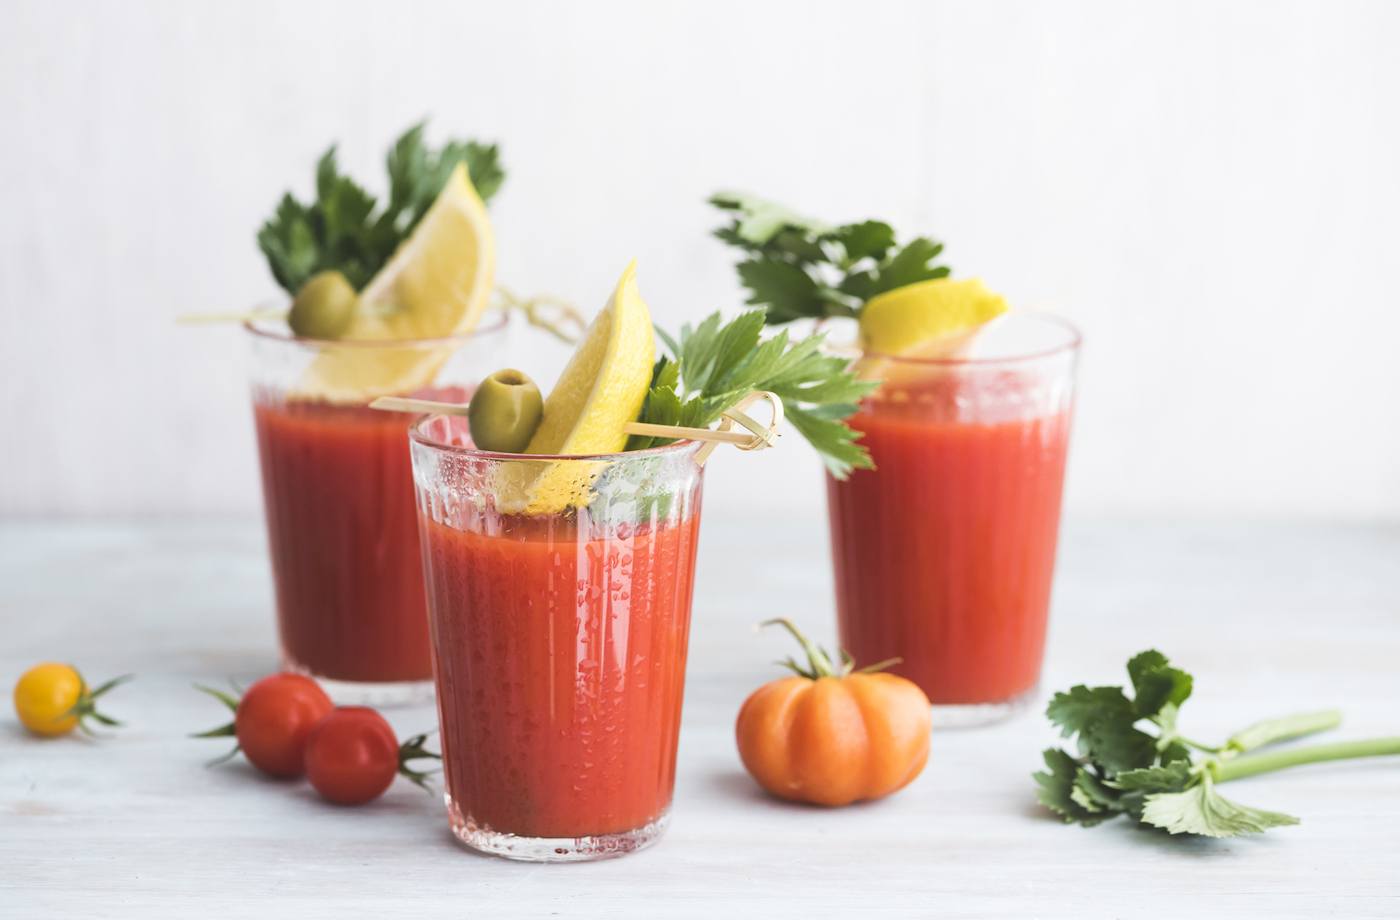 6 tomato juice benefits that make it the new celery juice